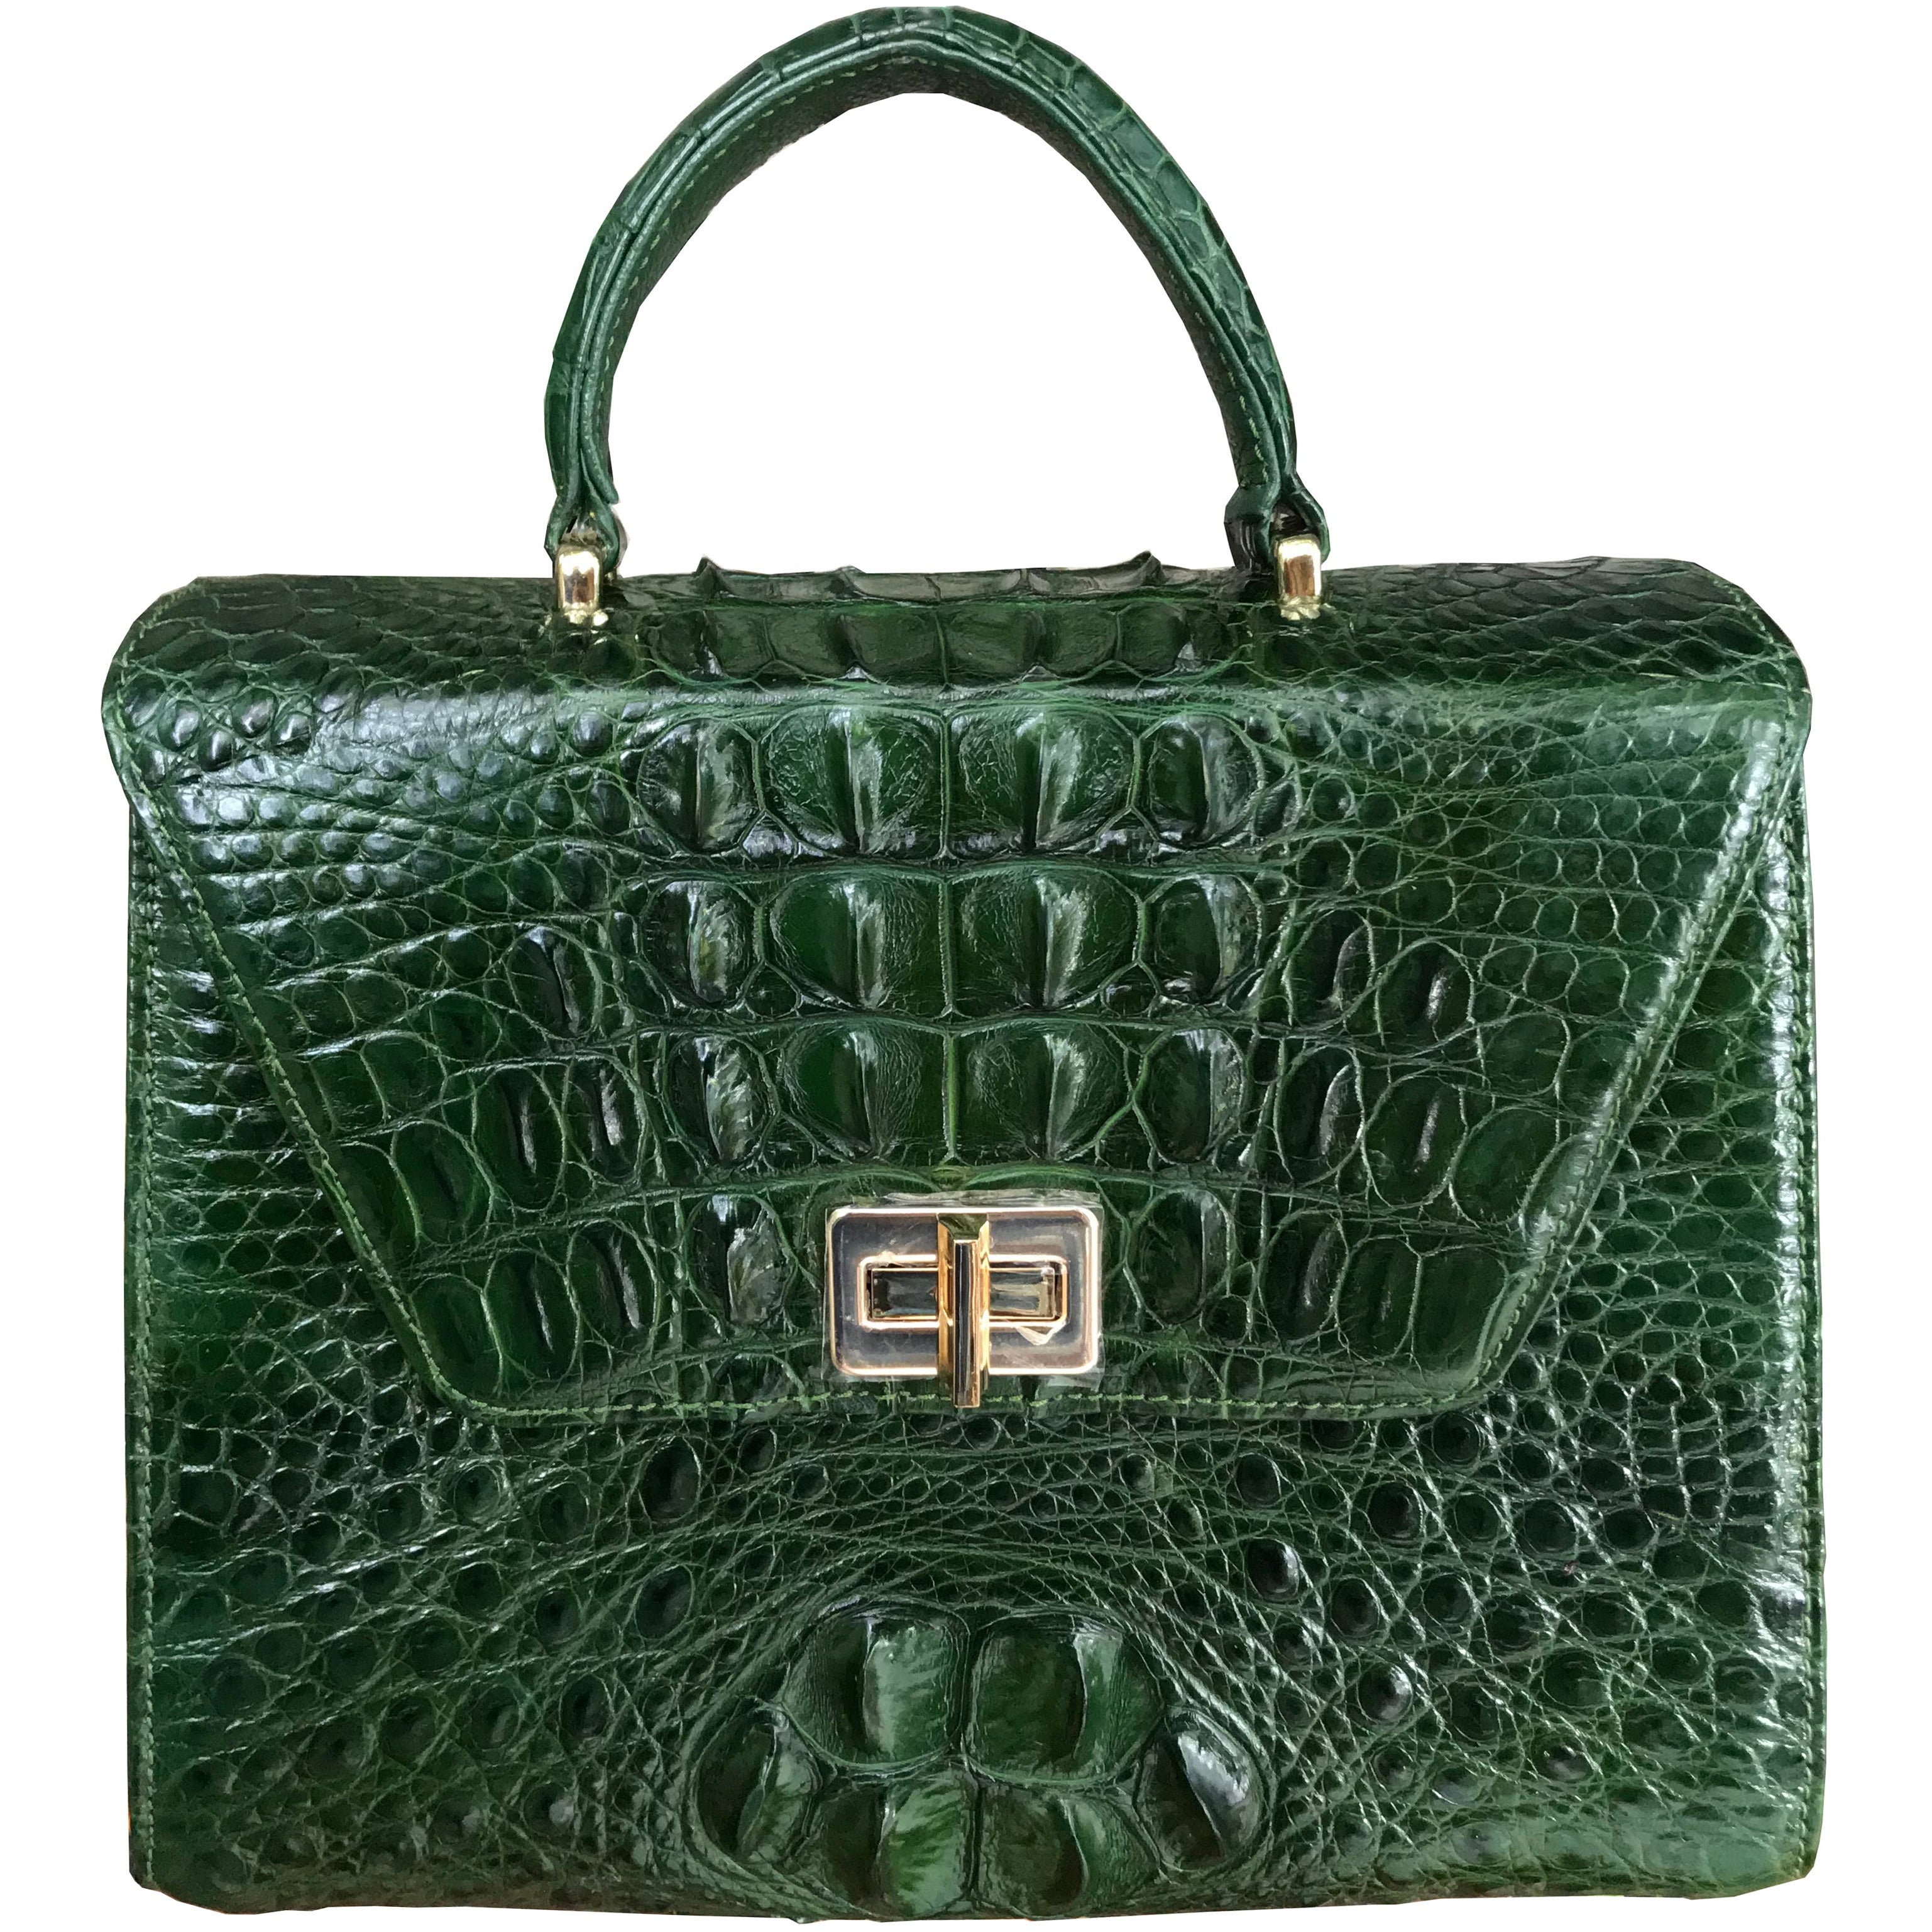 Buy perfect leather Women Brown Shoulder Bag Brown Online @ Best Price in  India | Flipkart.com